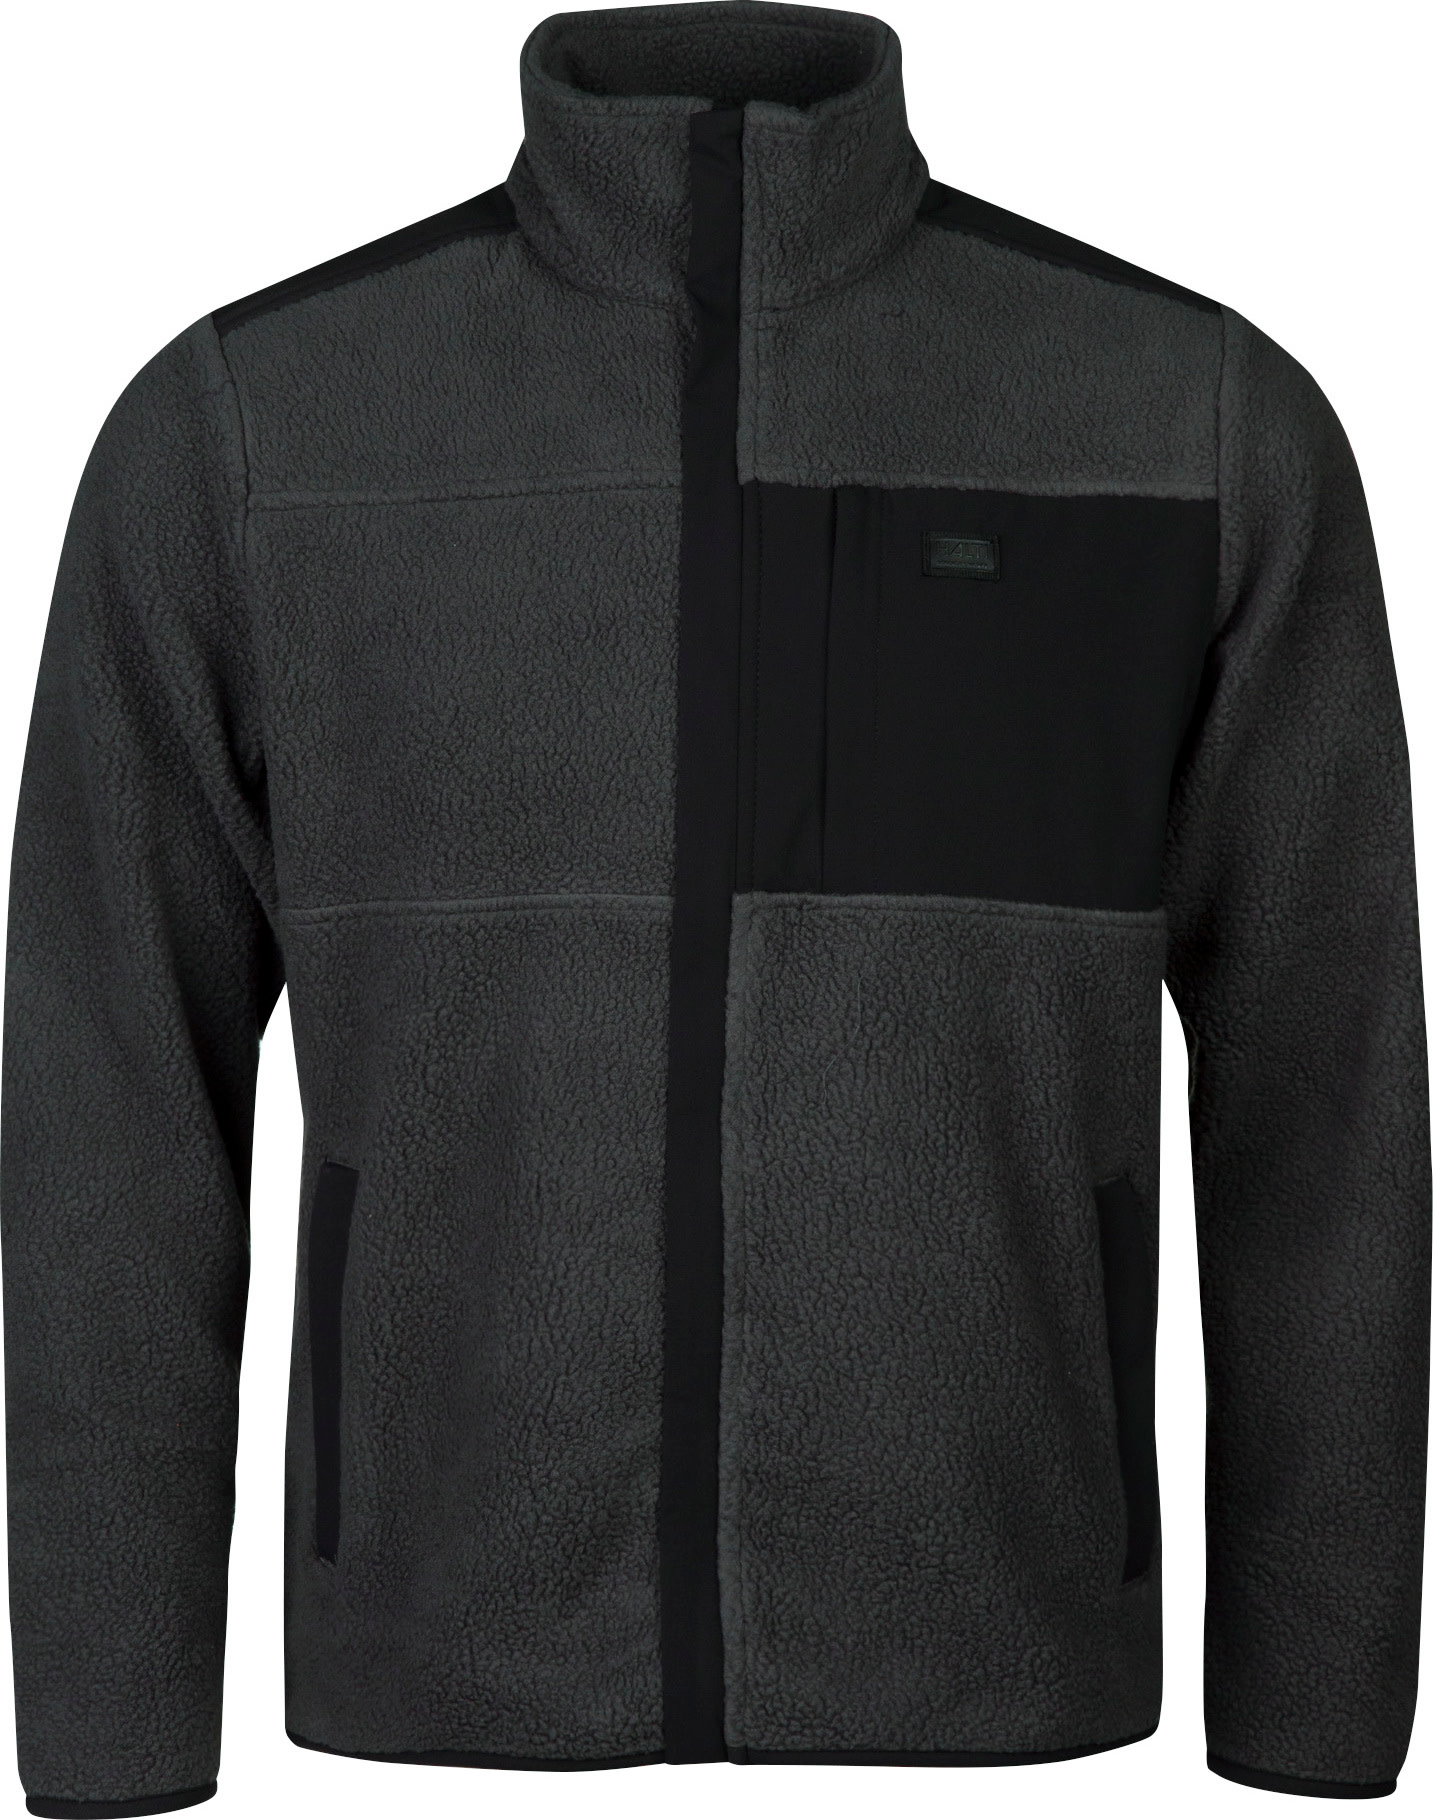 Halti Men's Klaidu Fleece Jacket Black Sand Grey L, Black Sand Grey